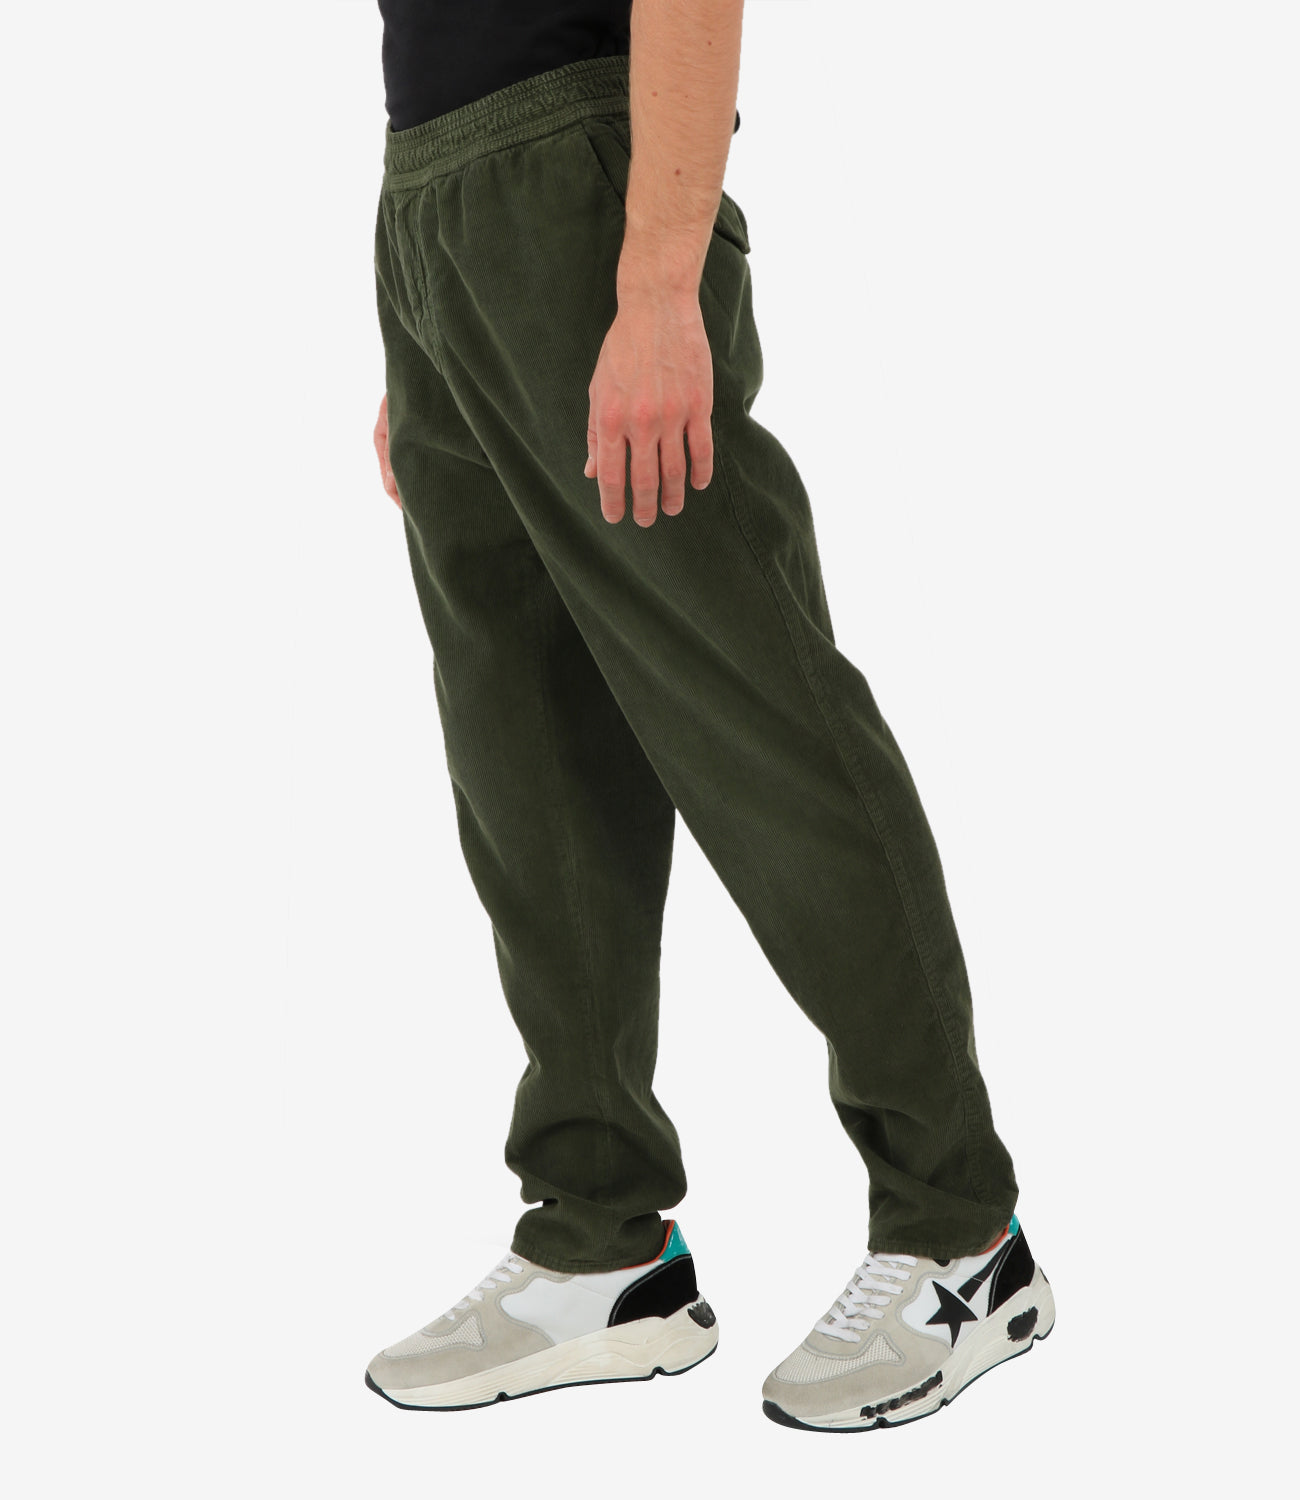 Pantalone Amos Golden Goose Deluxe Brand Verde Militare